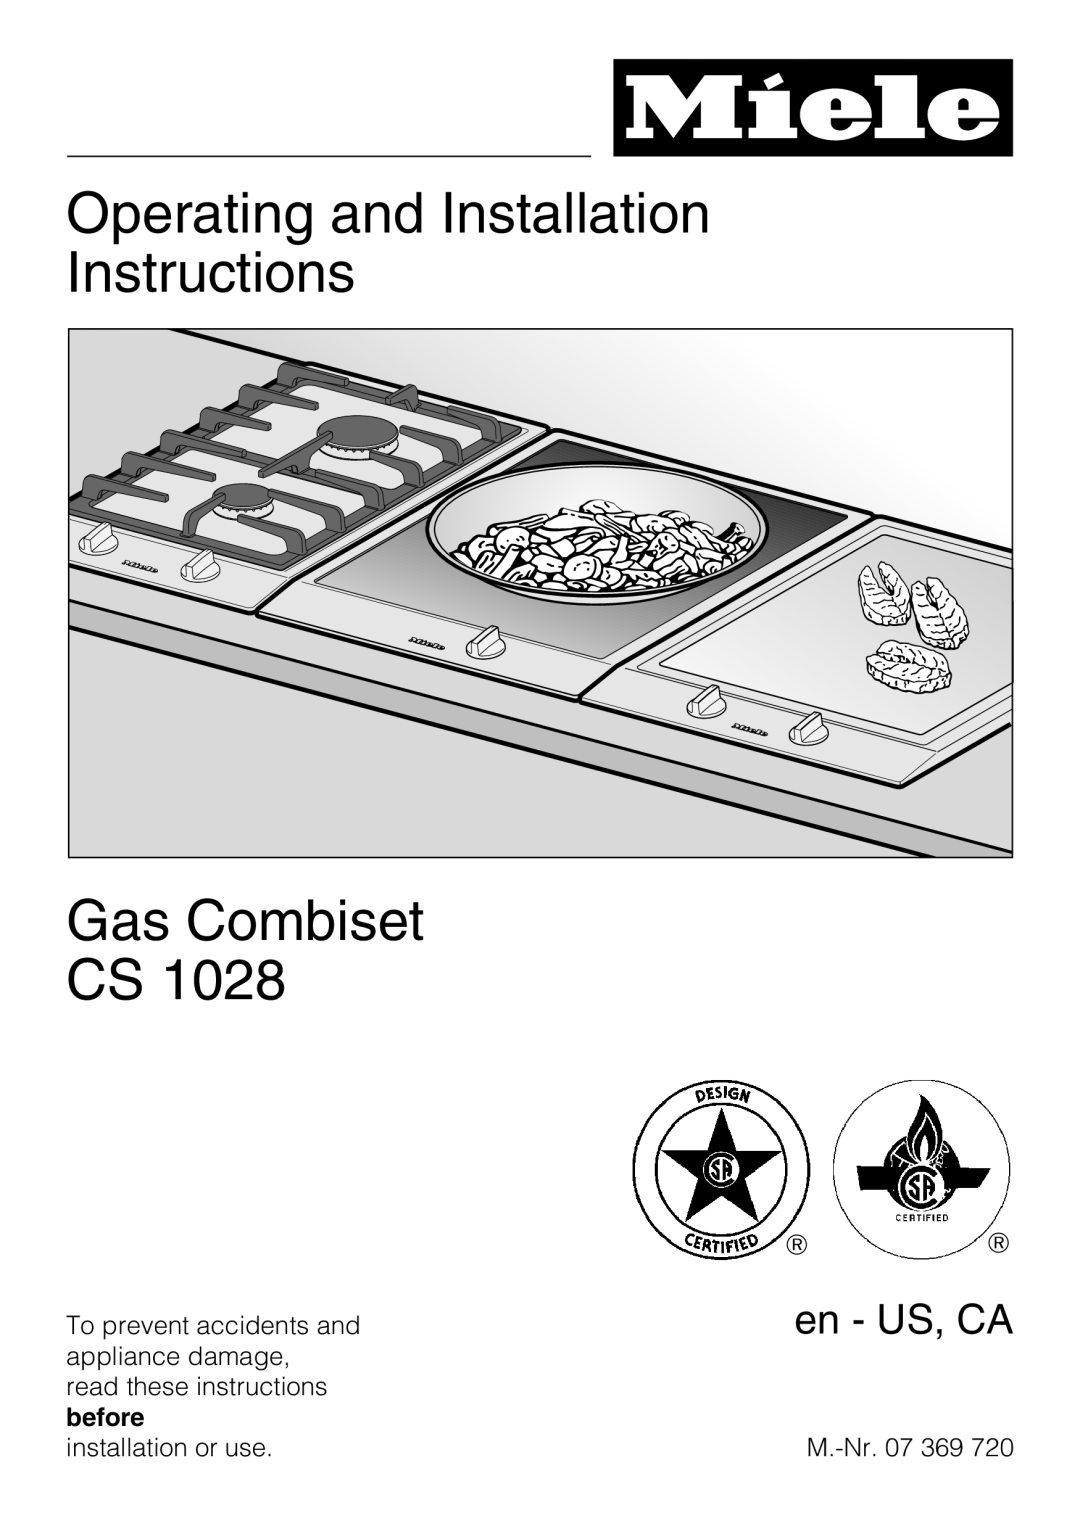 Miele CS1028 installation instructions Operating and Installation Instructions Gas Combiset CS, en - US, CA 